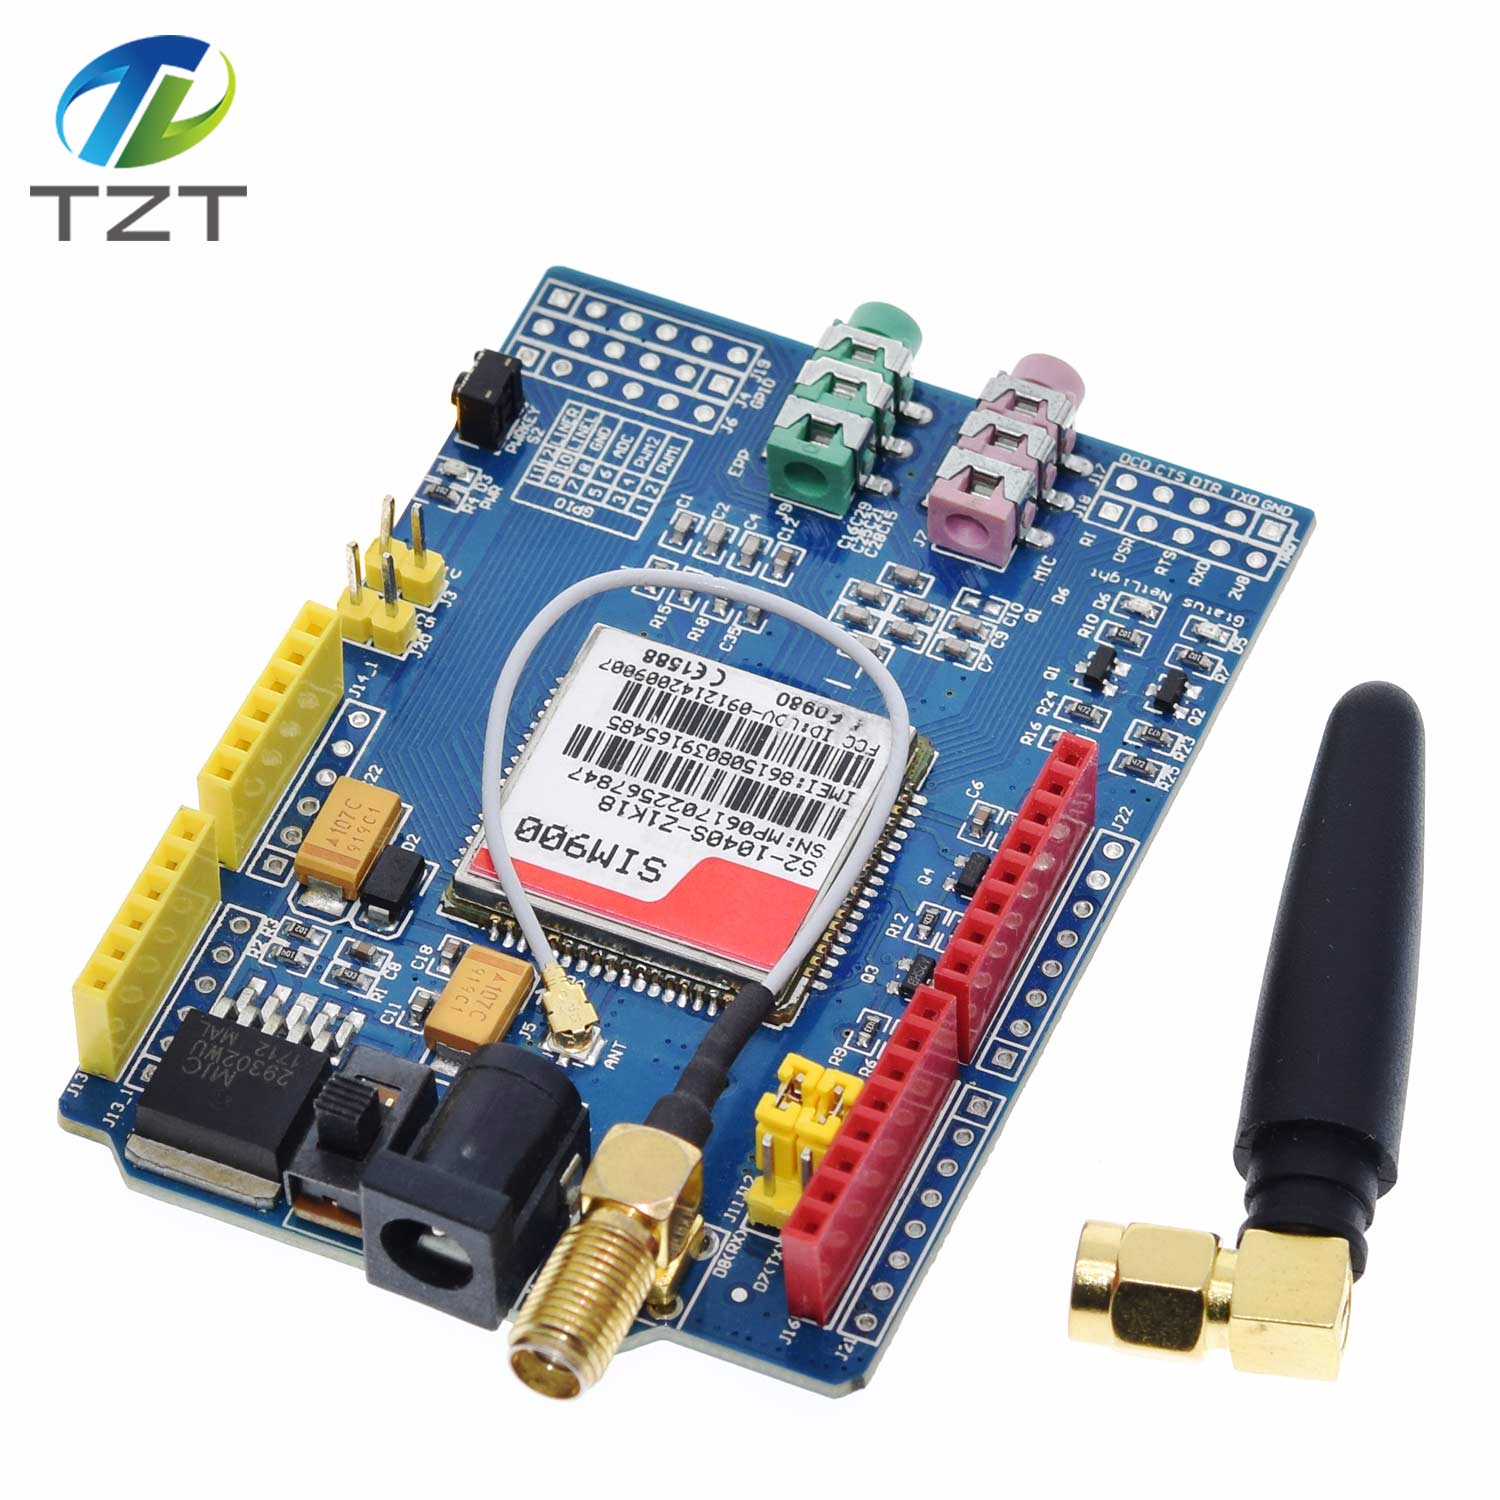 TZT SIM900 850/900/1800/1900 MHz GPRS/GSM Development Board Module Kit For Arduino